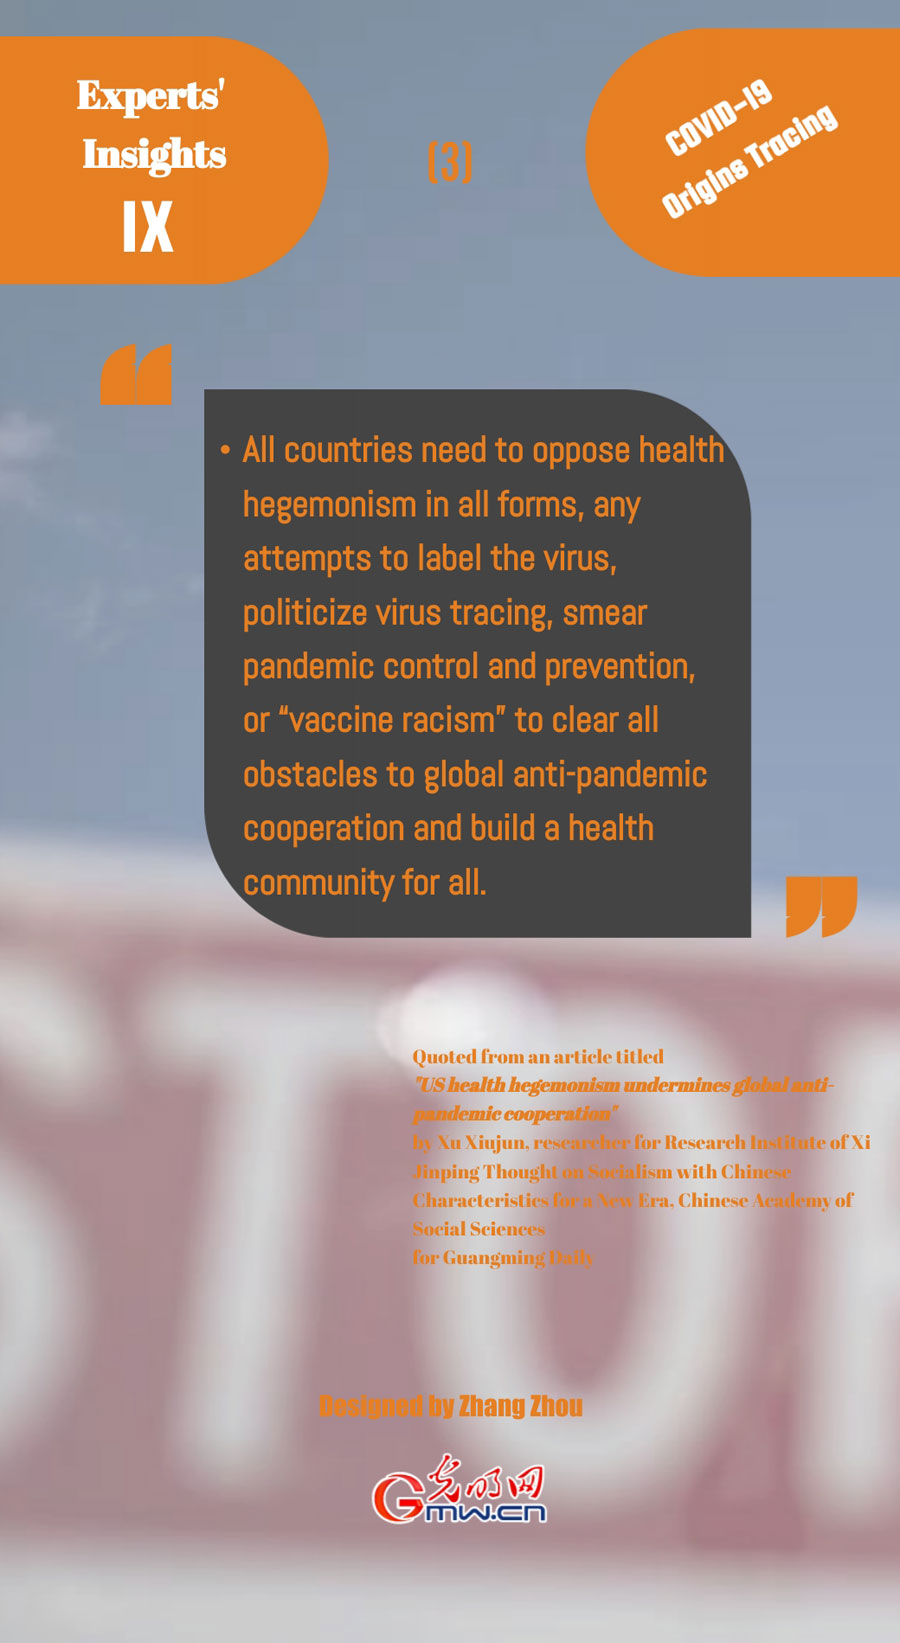 Experts' Insights IX: US health hegemonism undermines global anti-pandemic cooperation